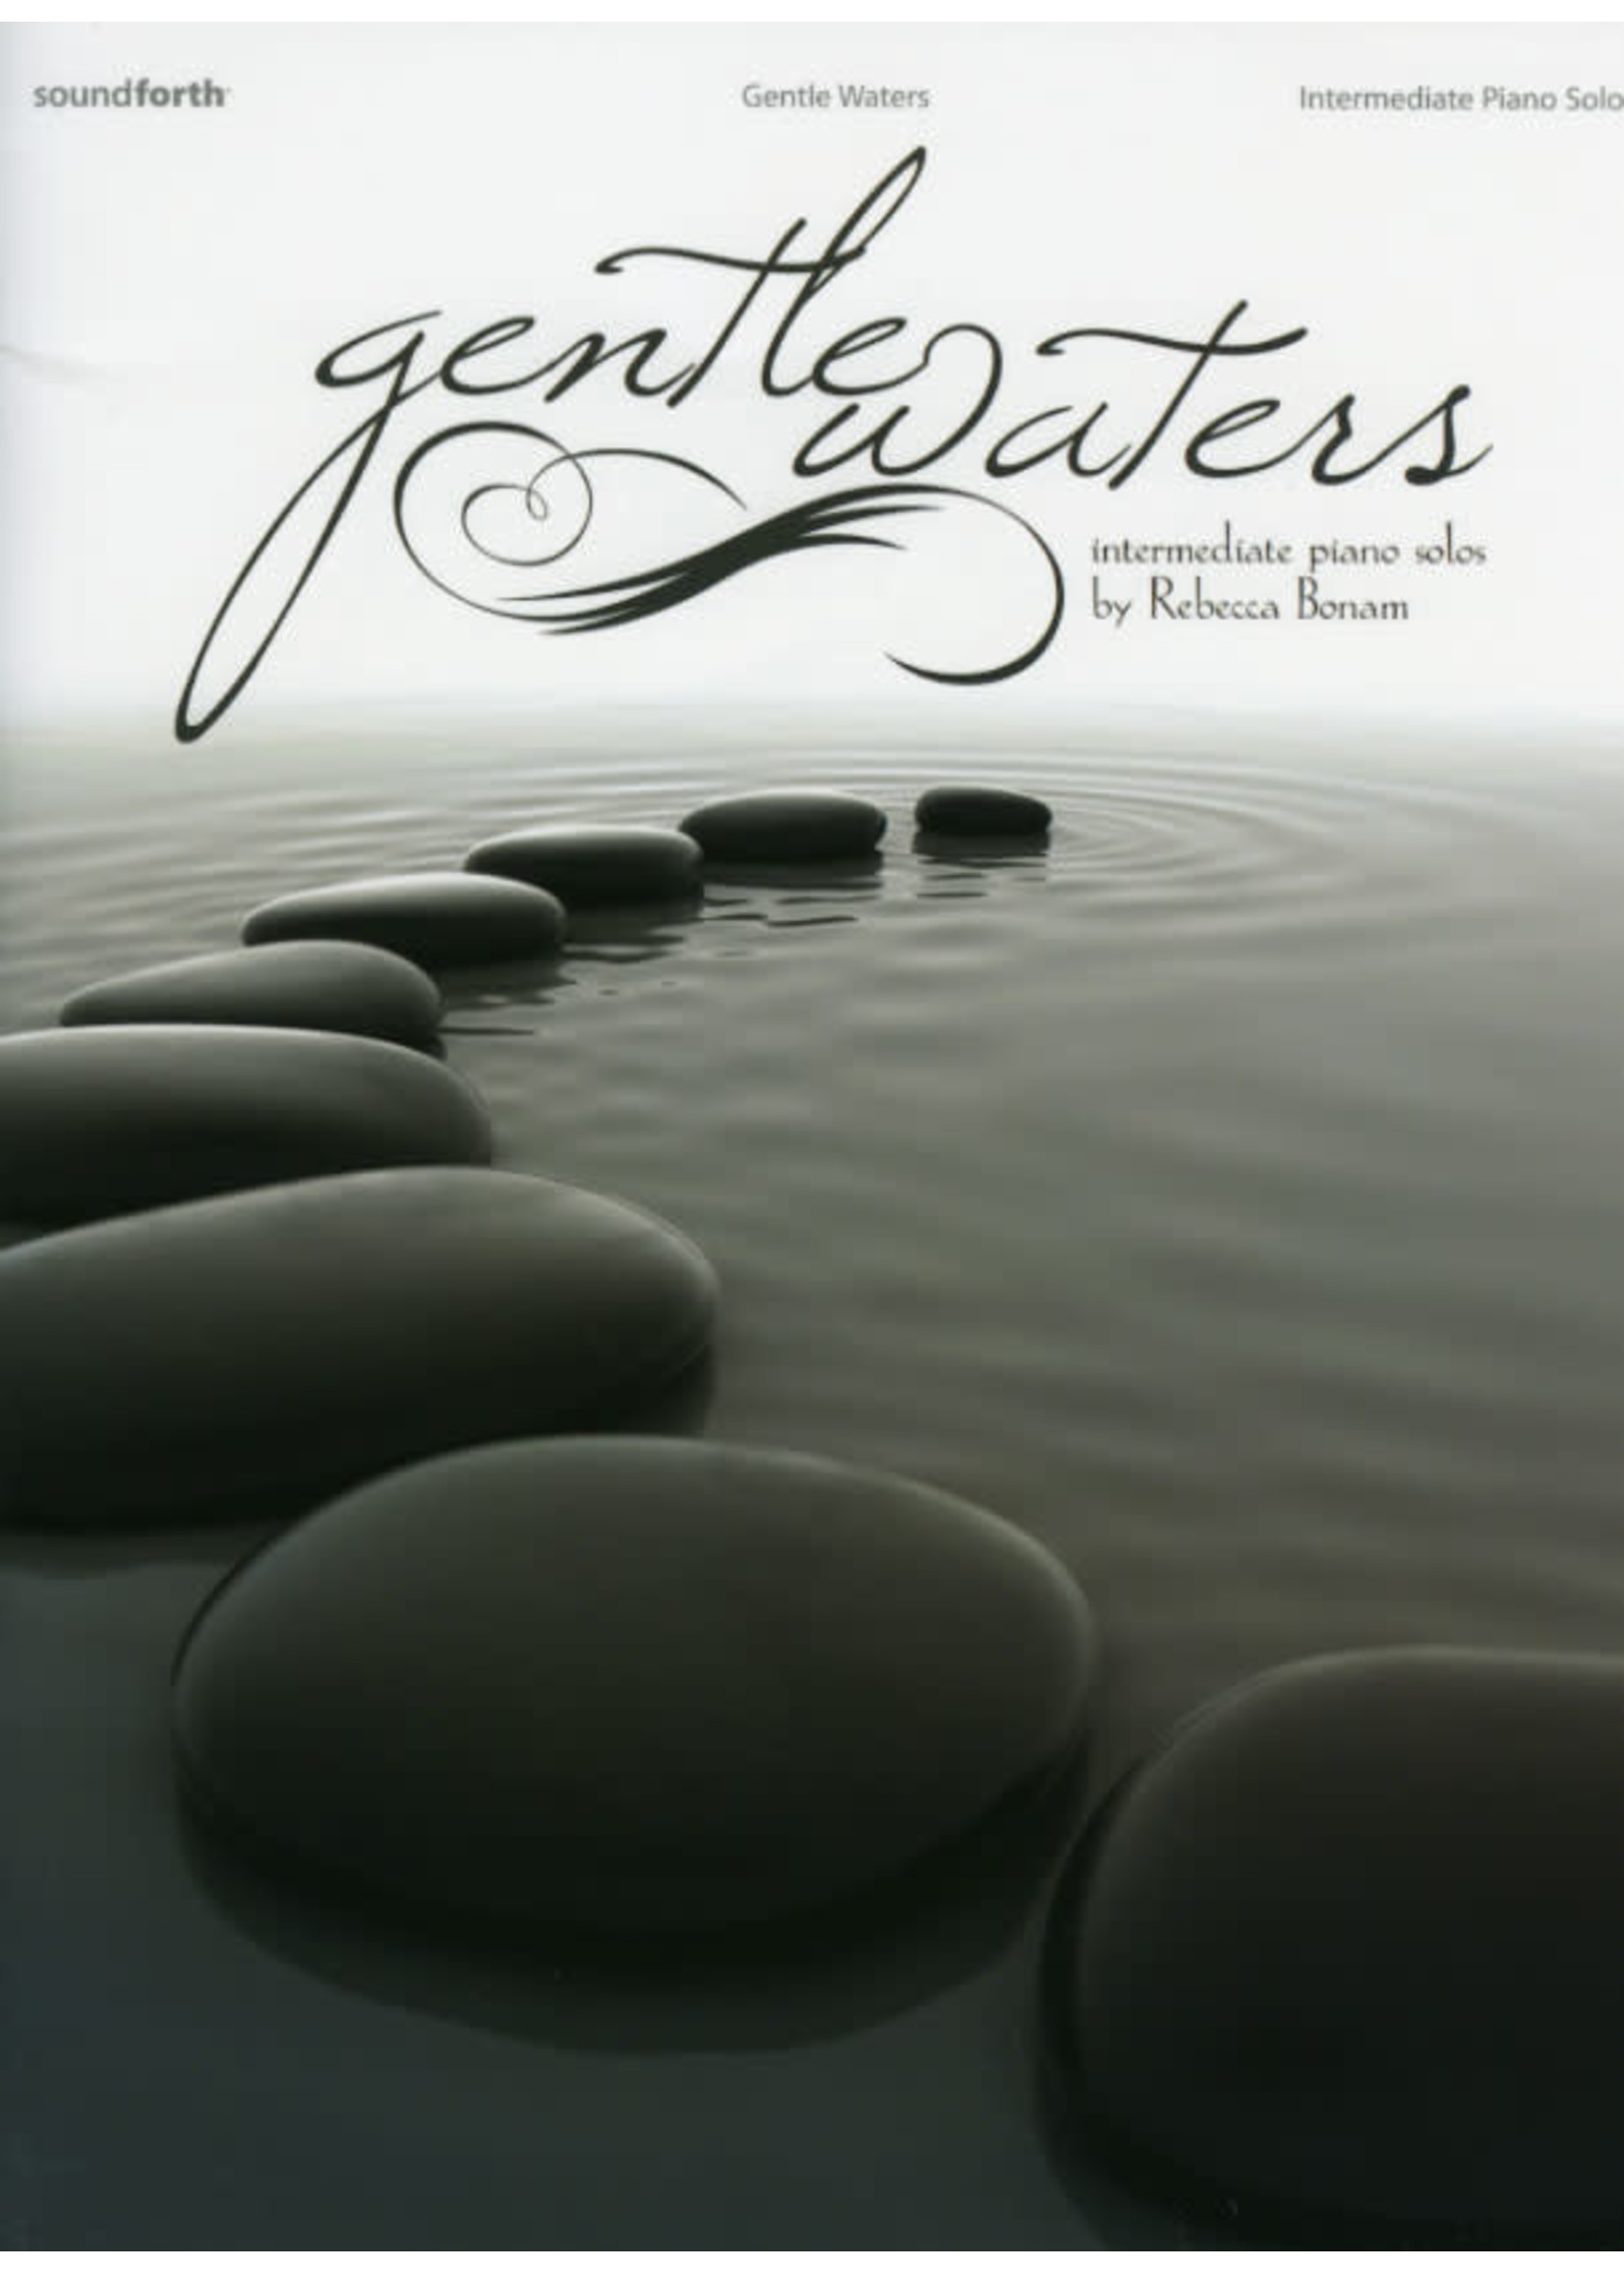 Gentle Waters Intermediate Piano Solos (Bonam)